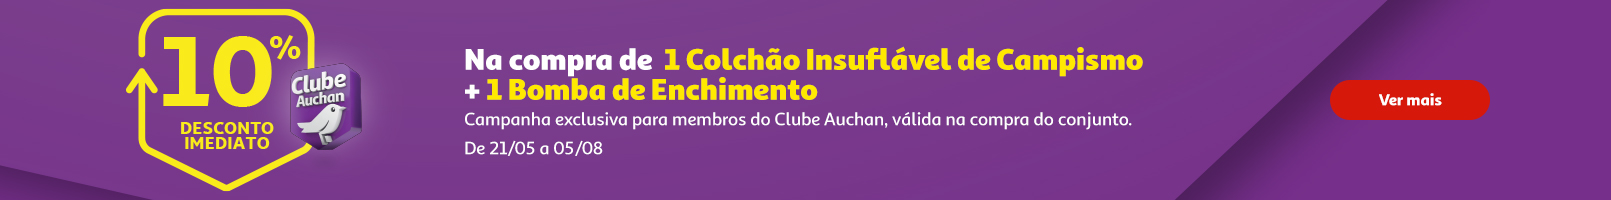 Campanha Clube Auchan Colchão Campismo + Bomba || 21/05 a 05/08 | Auchan